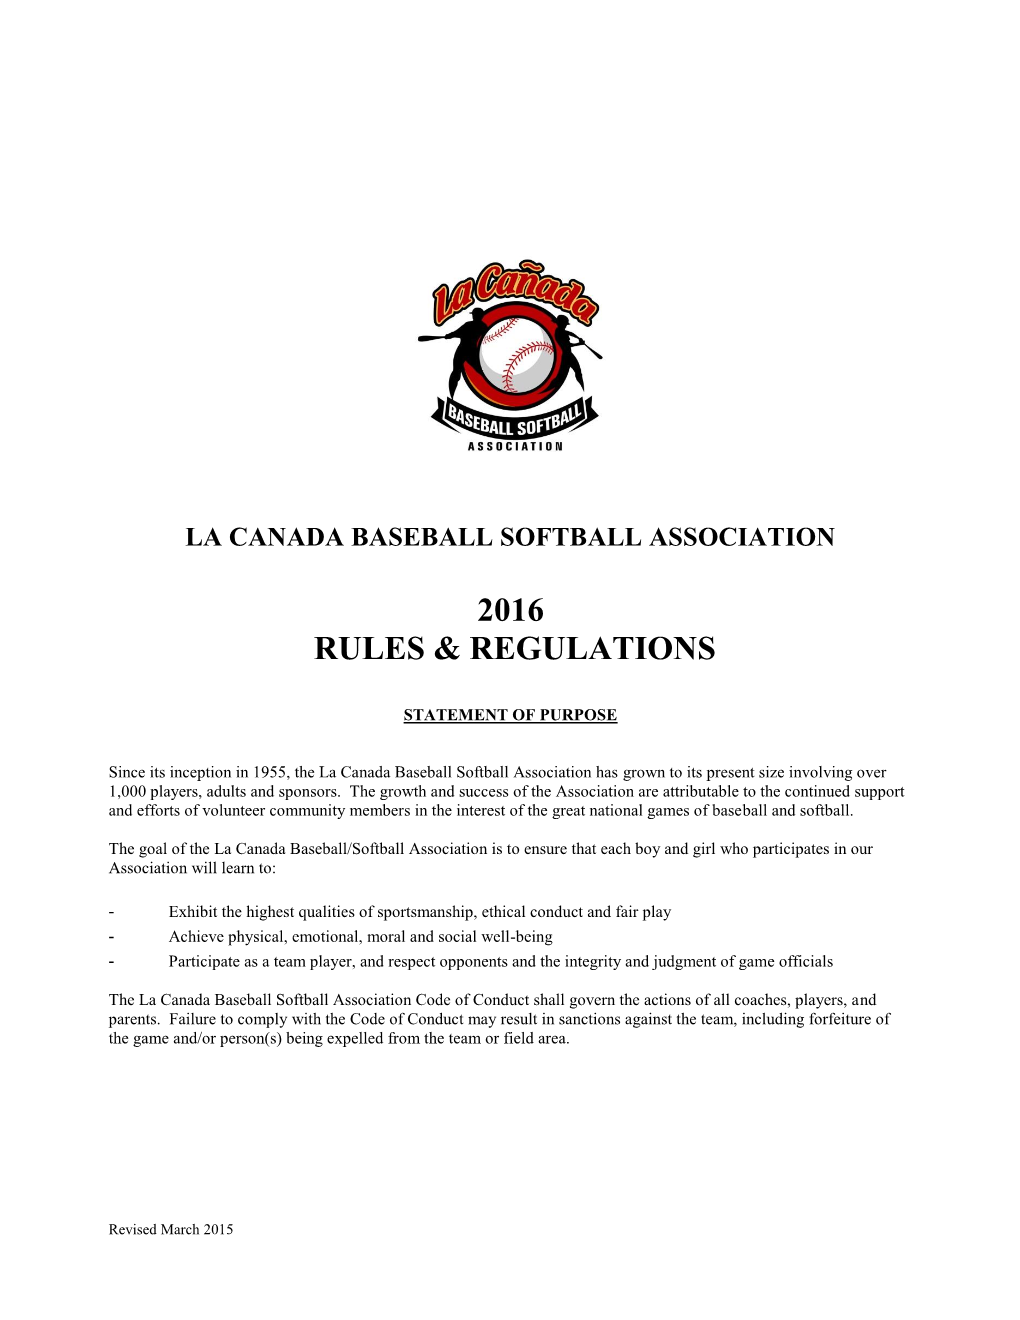 La Canada Baseball Softball Association 2016 Rules & Regulations